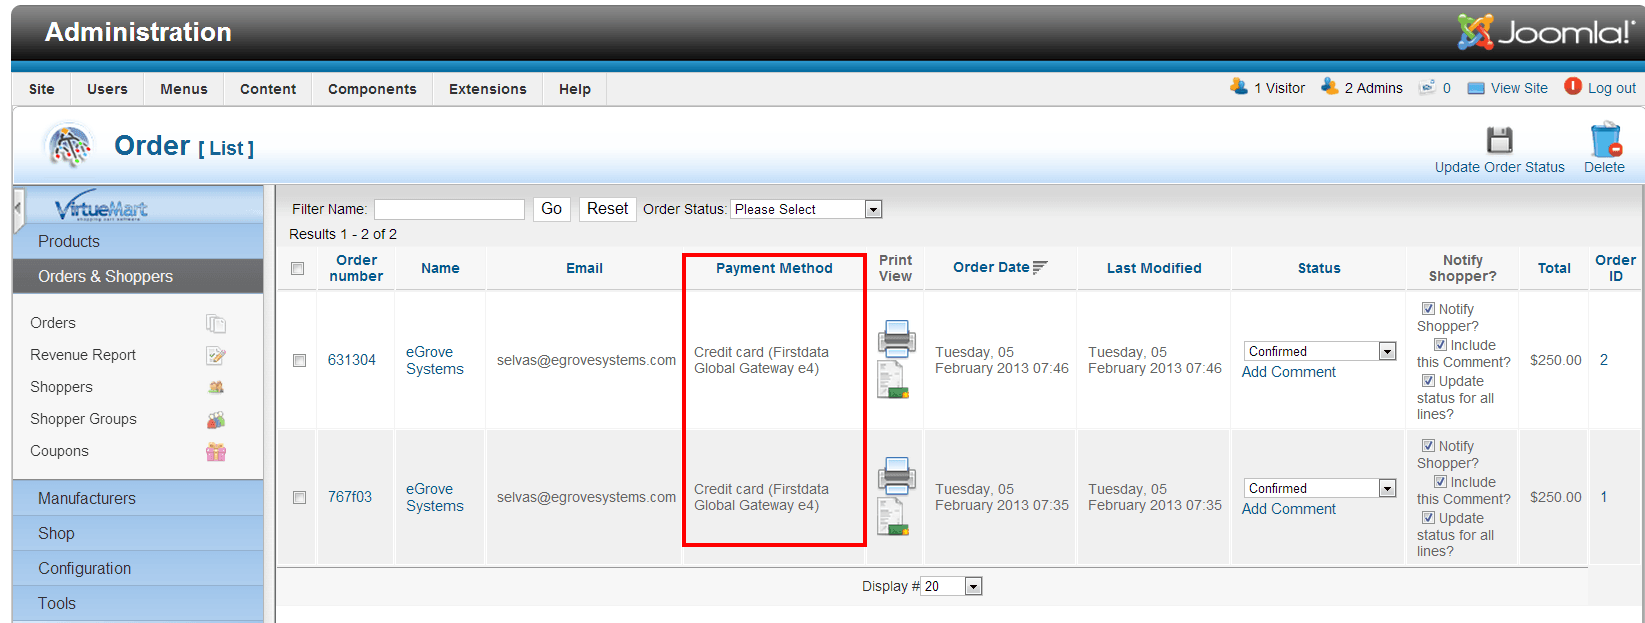 Joomla Virtuemart Payeezy First Data GGe4 Payment